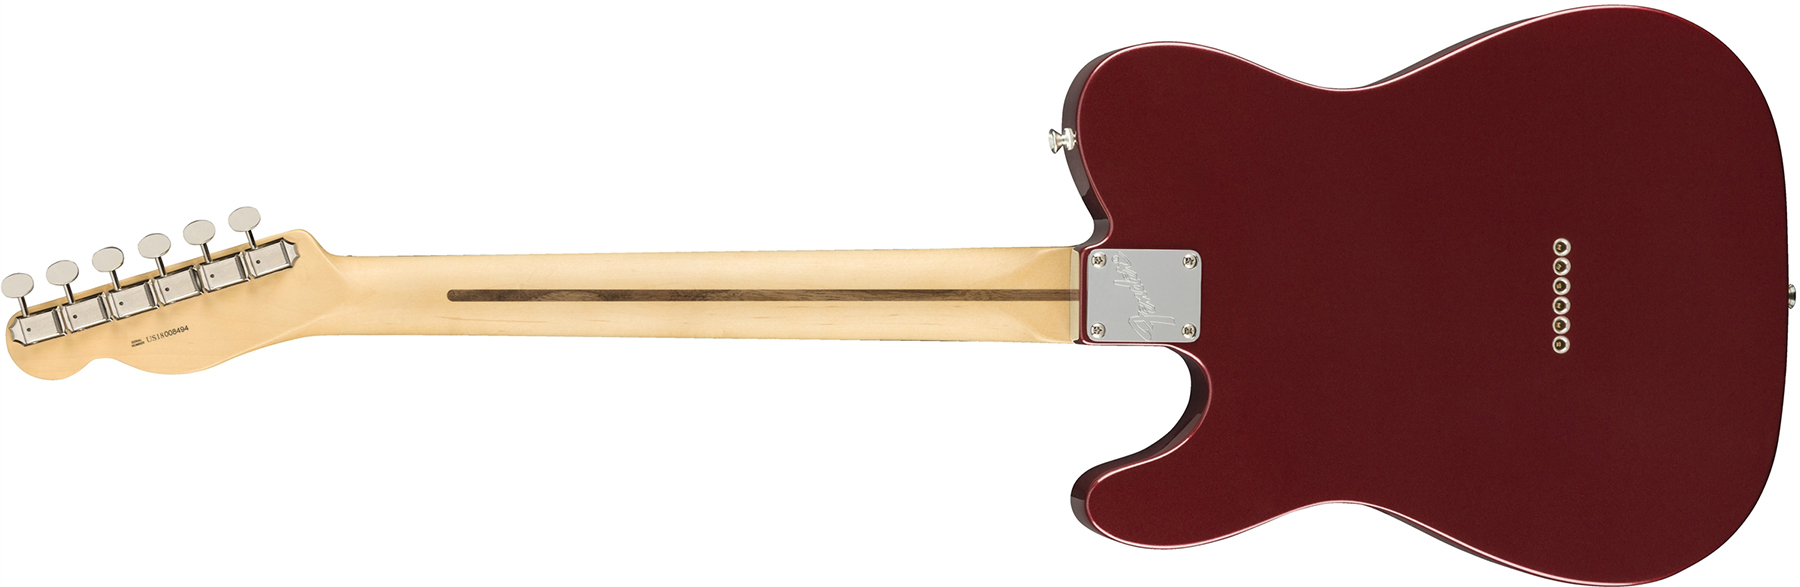 Fender Tele American Performer Hum Usa Sh Rw - Aubergine - Televorm elektrische gitaar - Variation 1